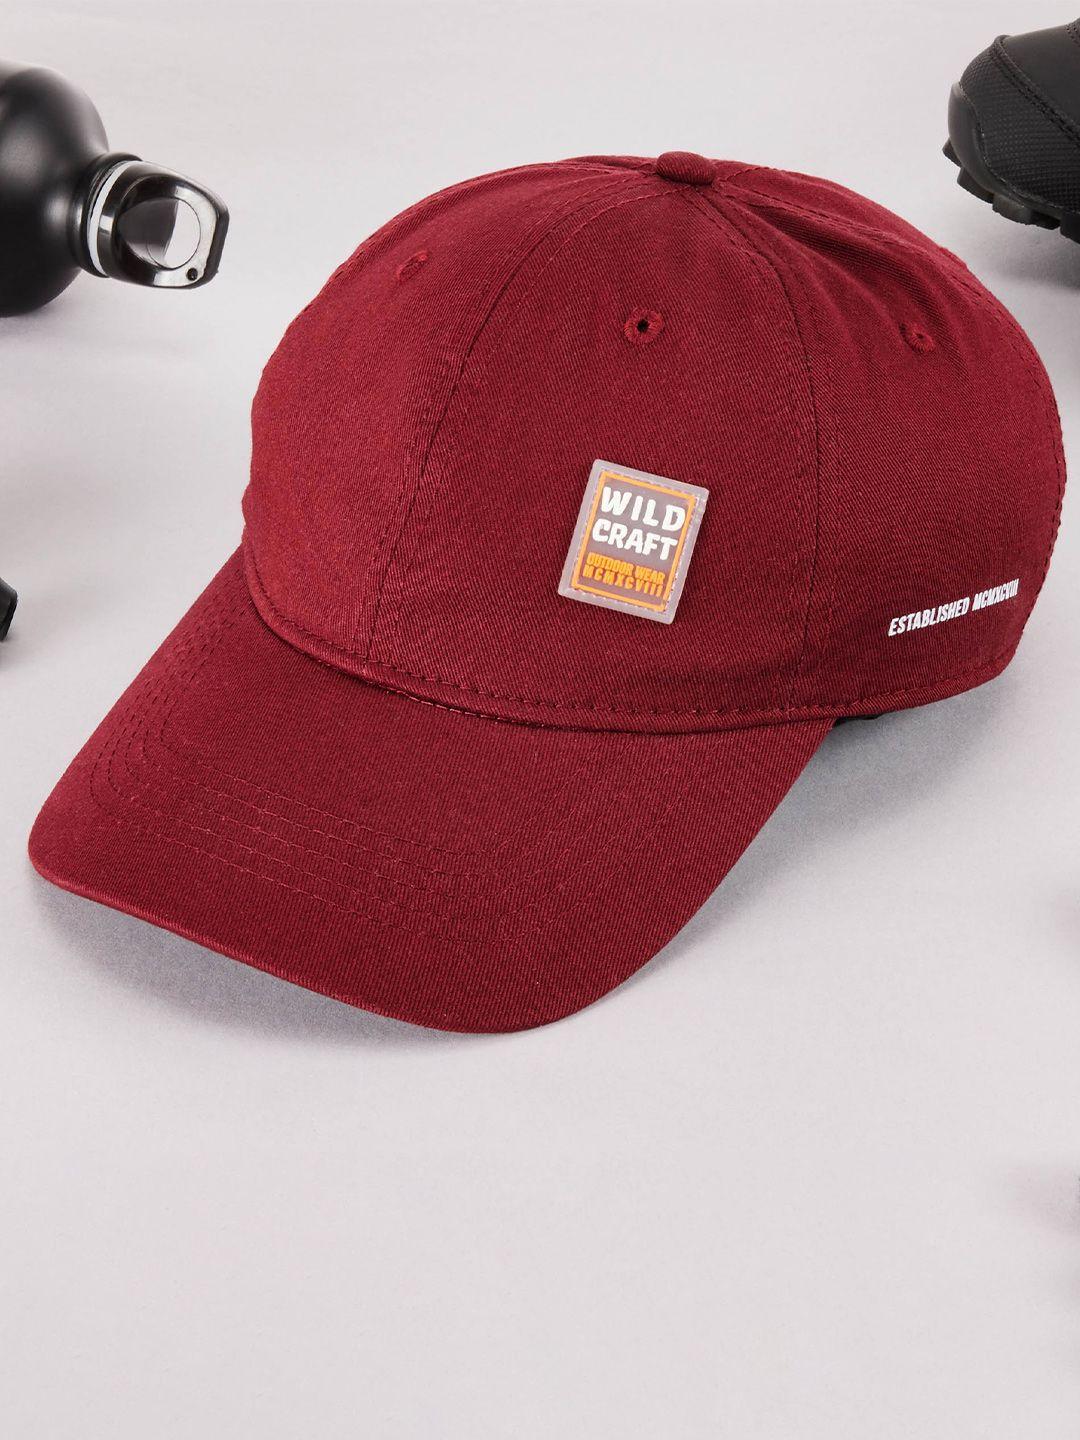 wildcraft adults red brand logo printed cotton baseball cap